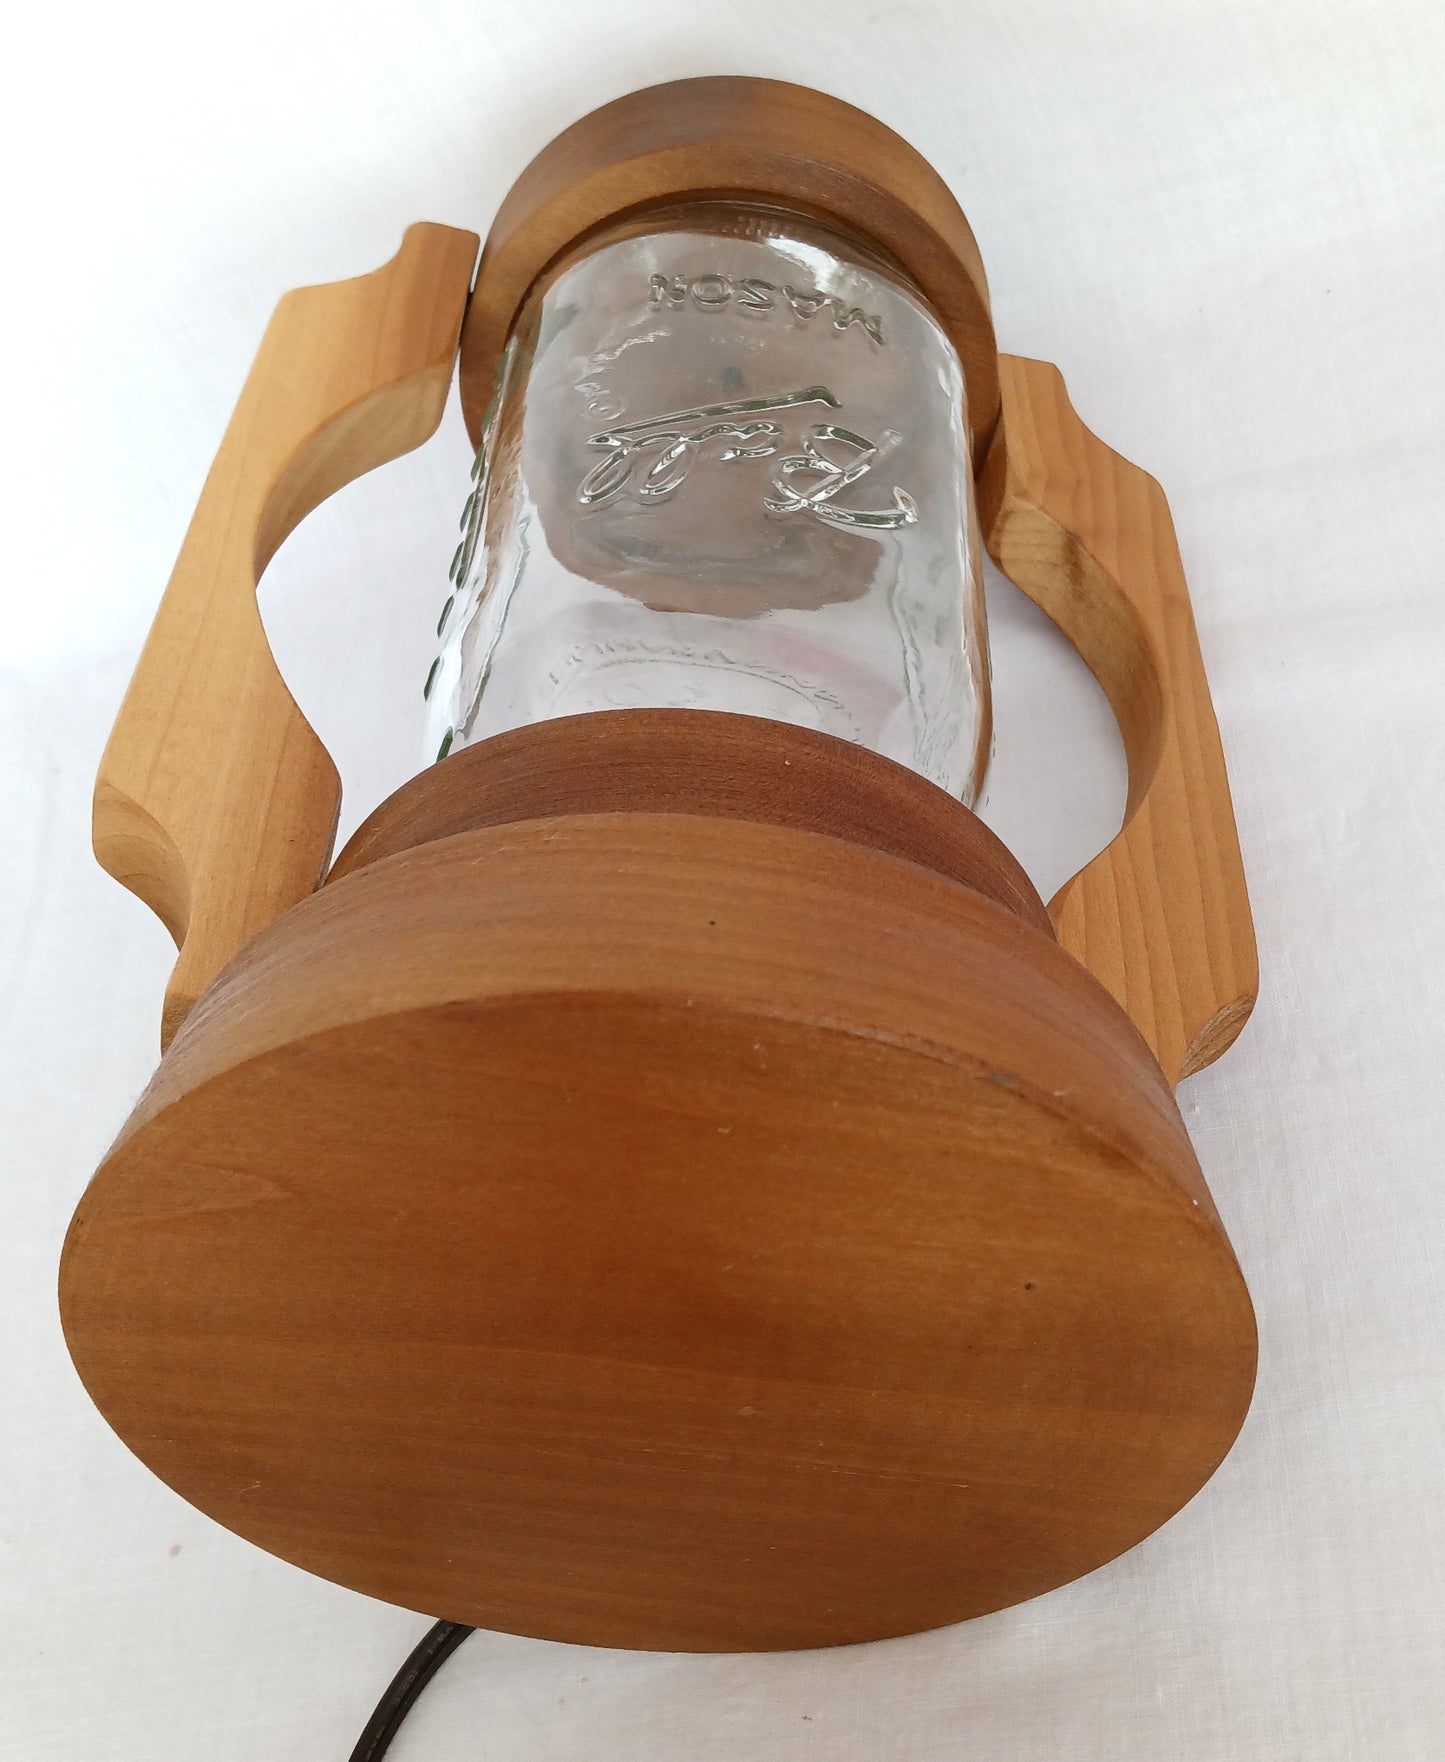 Vintage Arts & Crafts Table Lamp Lantern Style Cedar Wood Ball Masson Jar Glass Shade Brass Handle In Line Switch Farmhouse Decor-NOS